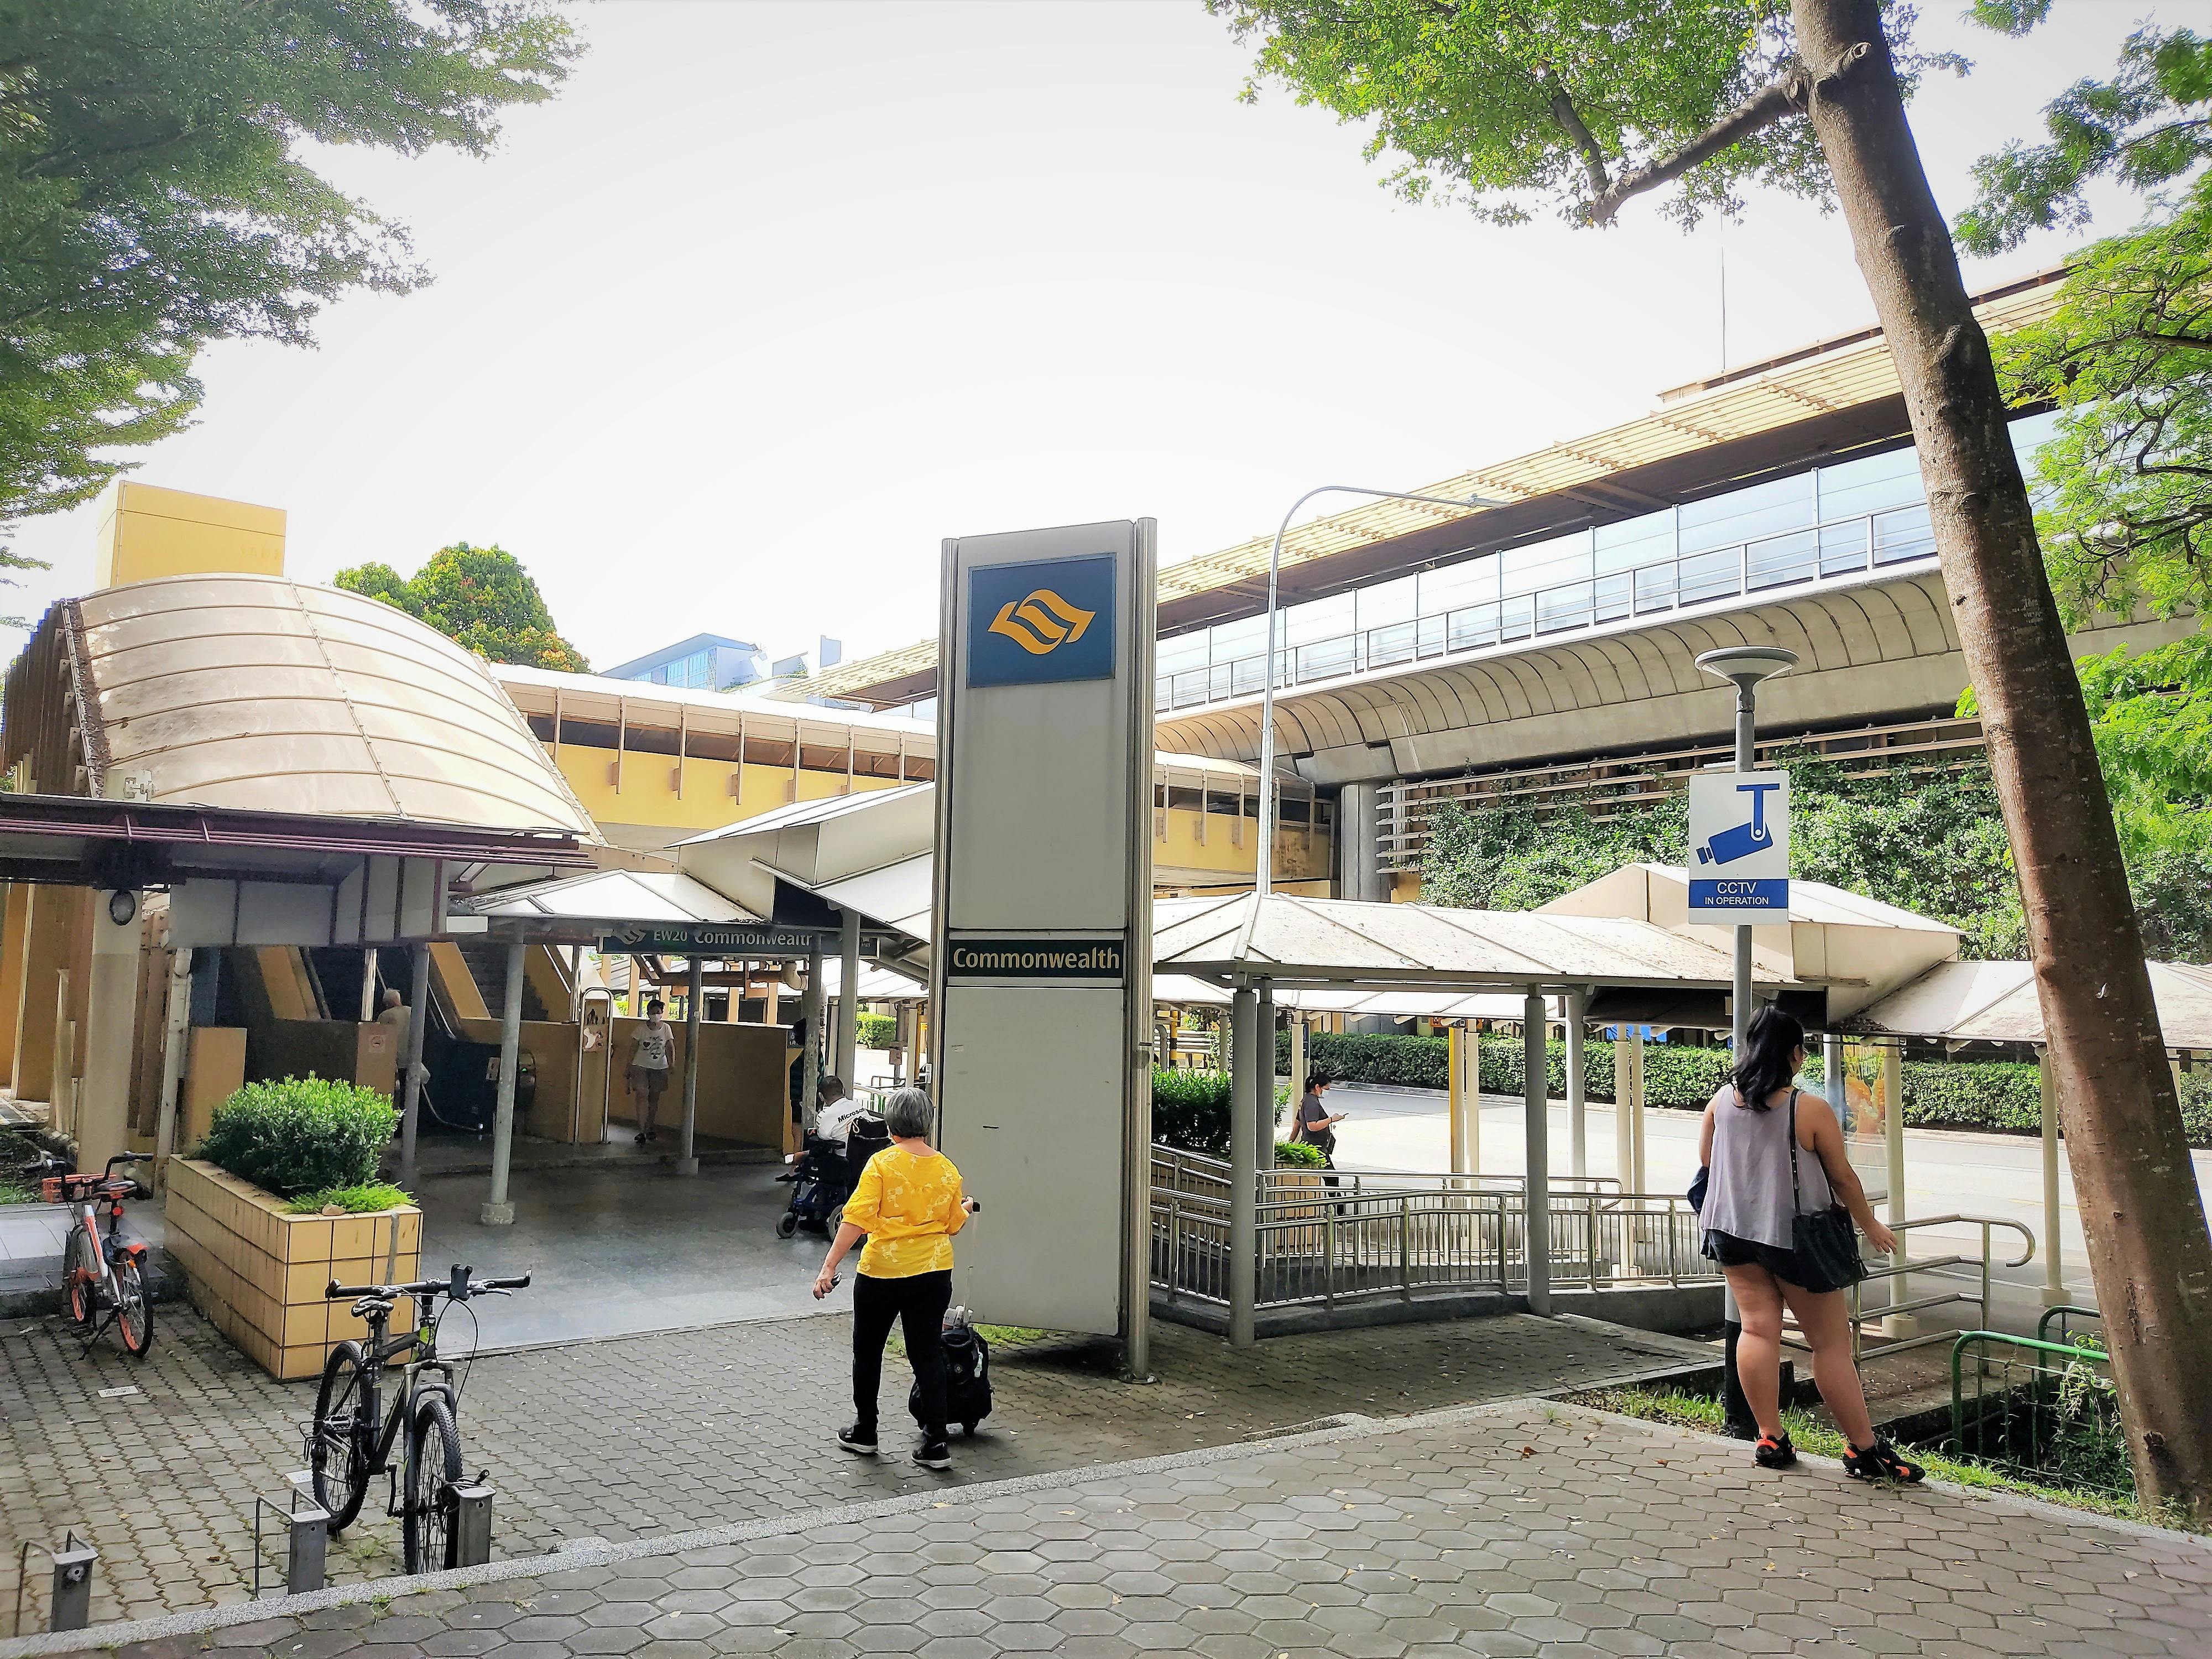 Commonwealth MRT Station entrance